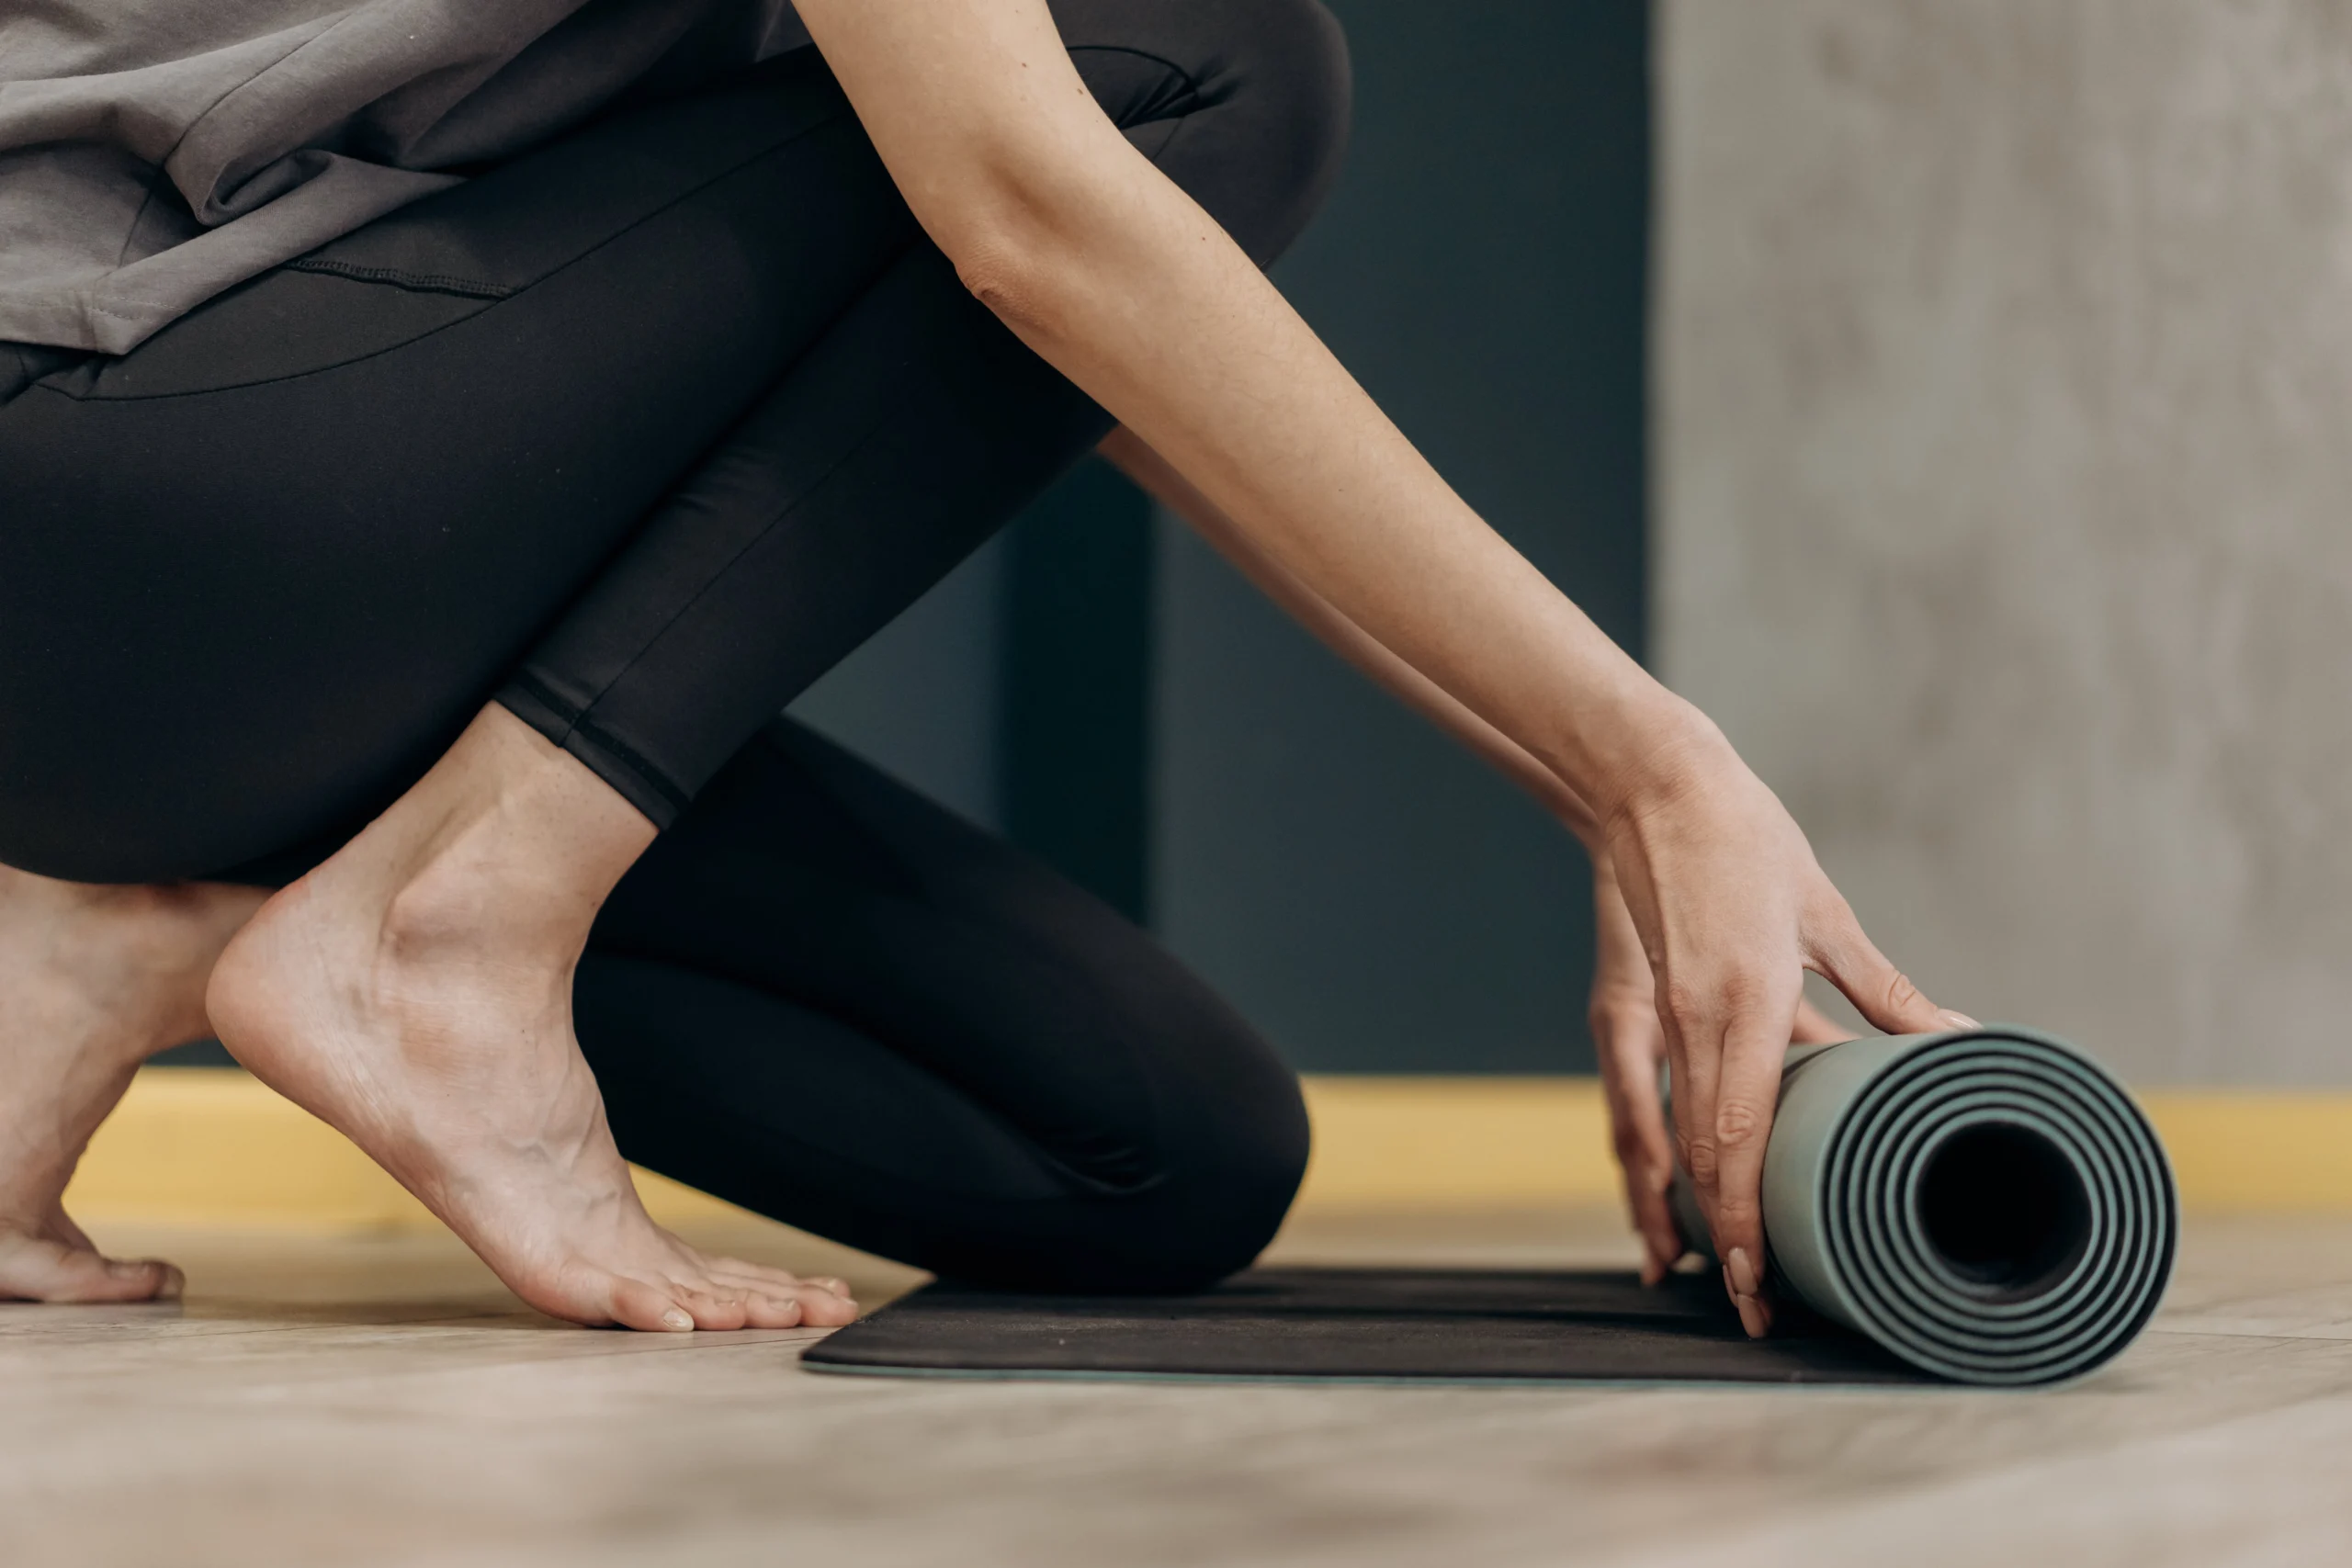 a woman rolls out a black yoga mat